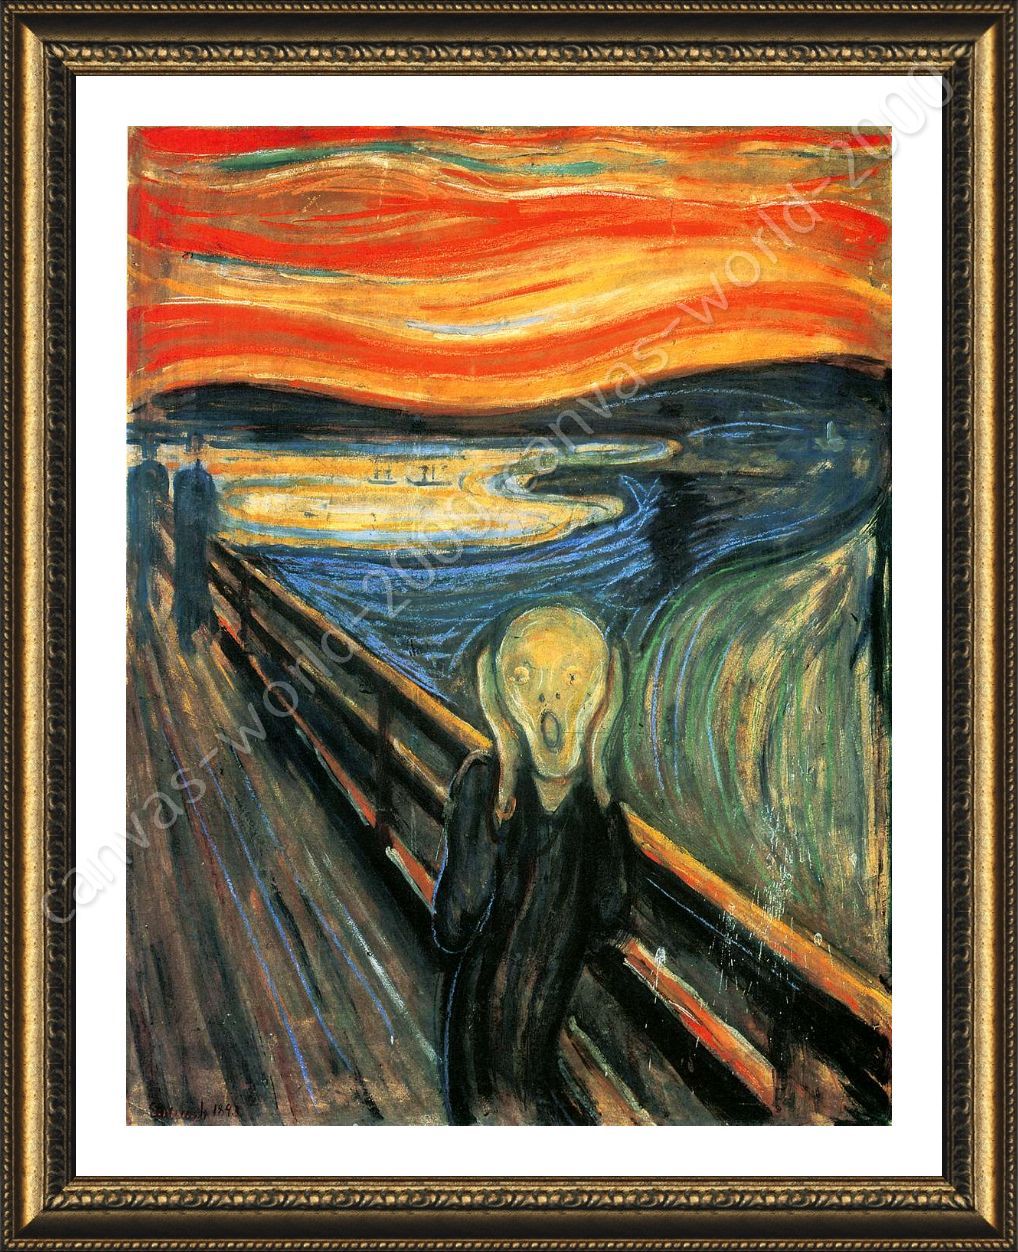 The Scream by Edvard Munch | Framed canvas | Wall art paint oil